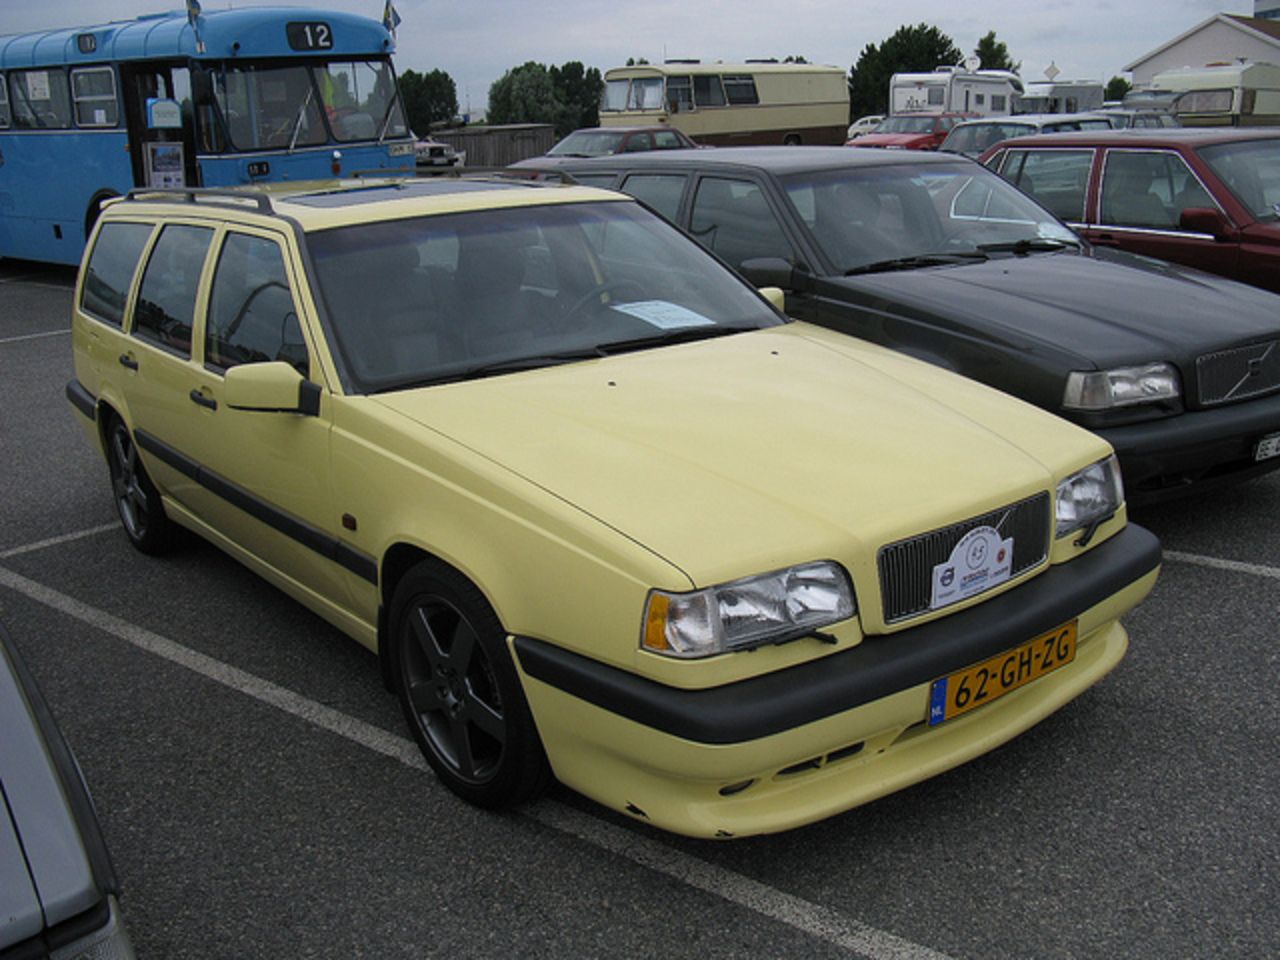 Flickr : La piscine des voitures jaunes / Voitures jaunes